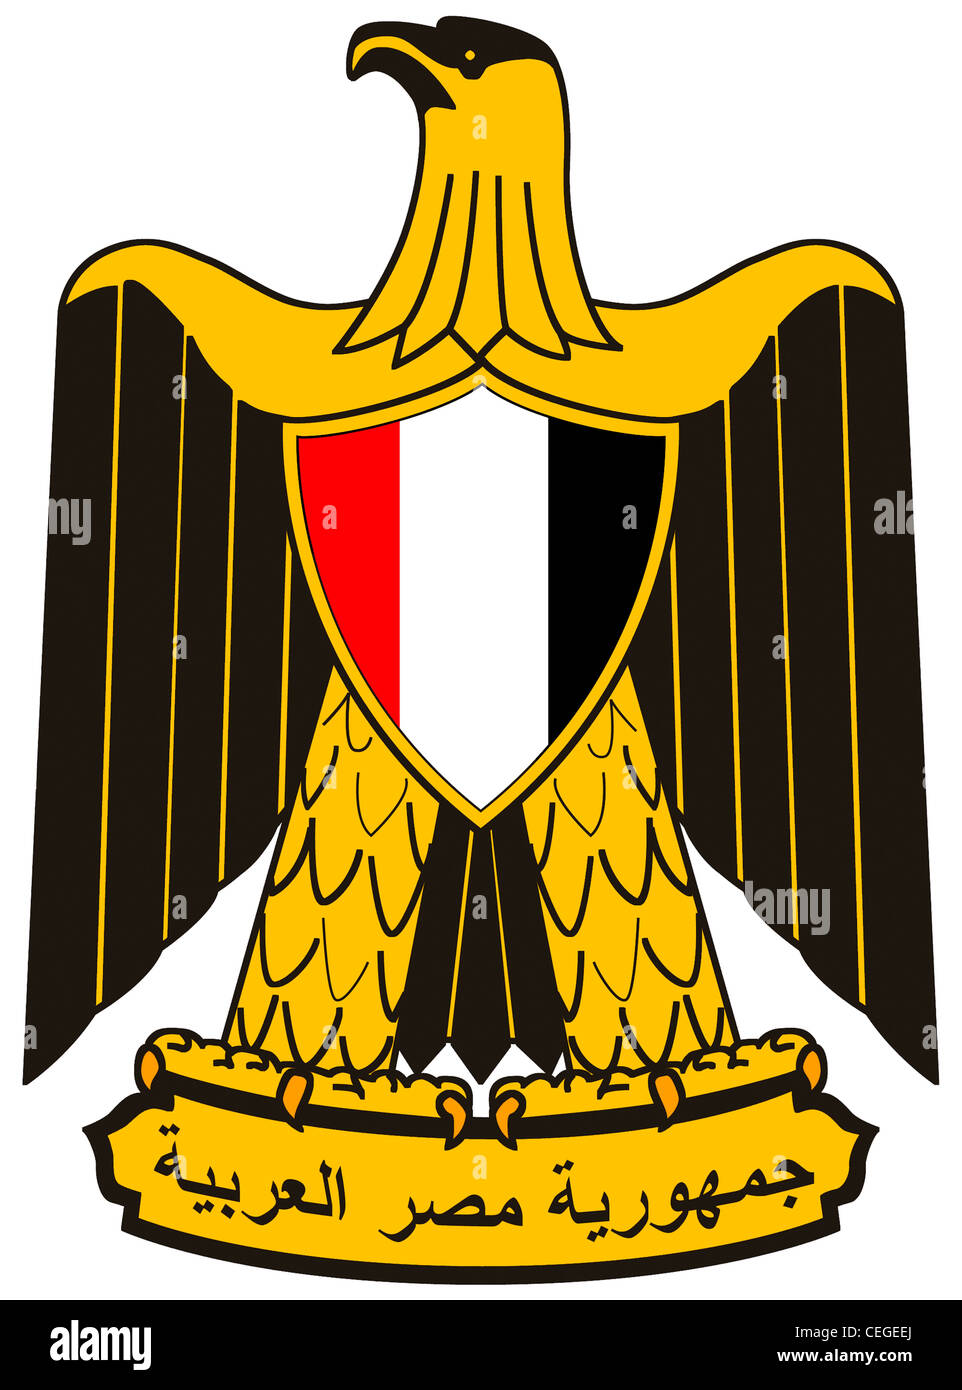 Escudo Nacional de la República Árabe de Egipto. Foto de stock